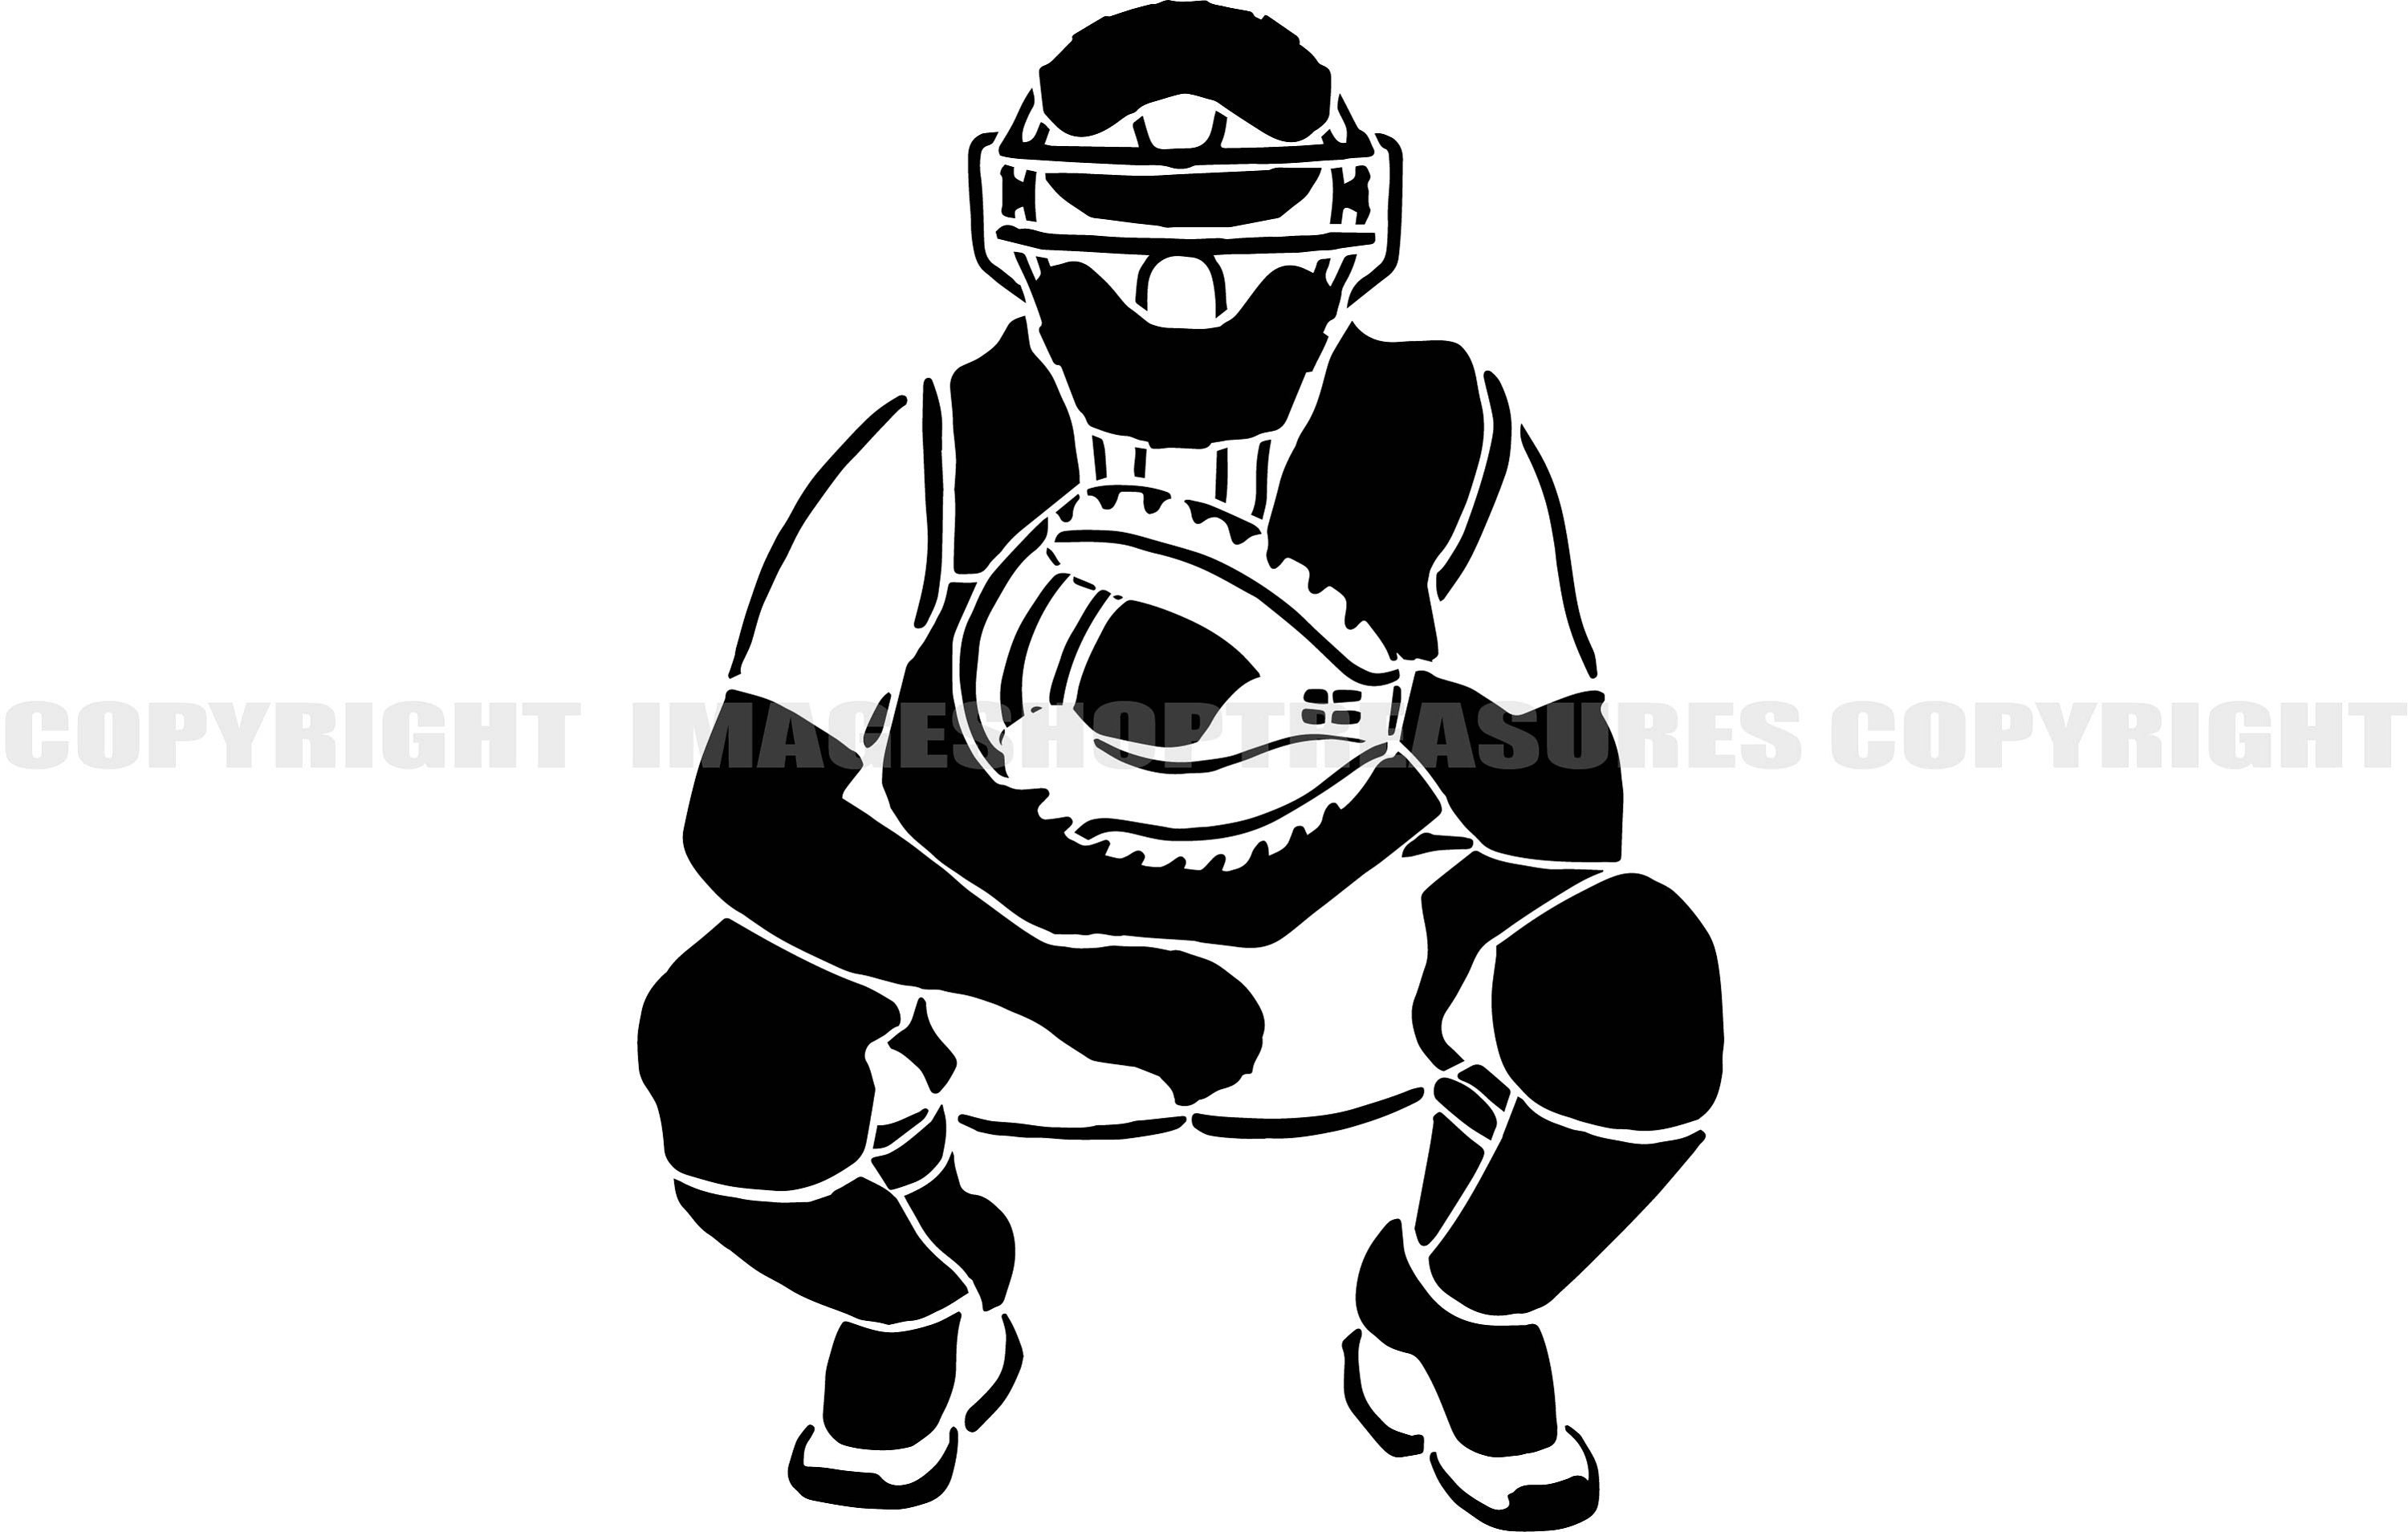 Baseball Catcher Chest Protector Cartoon Icon. Baseball Guard